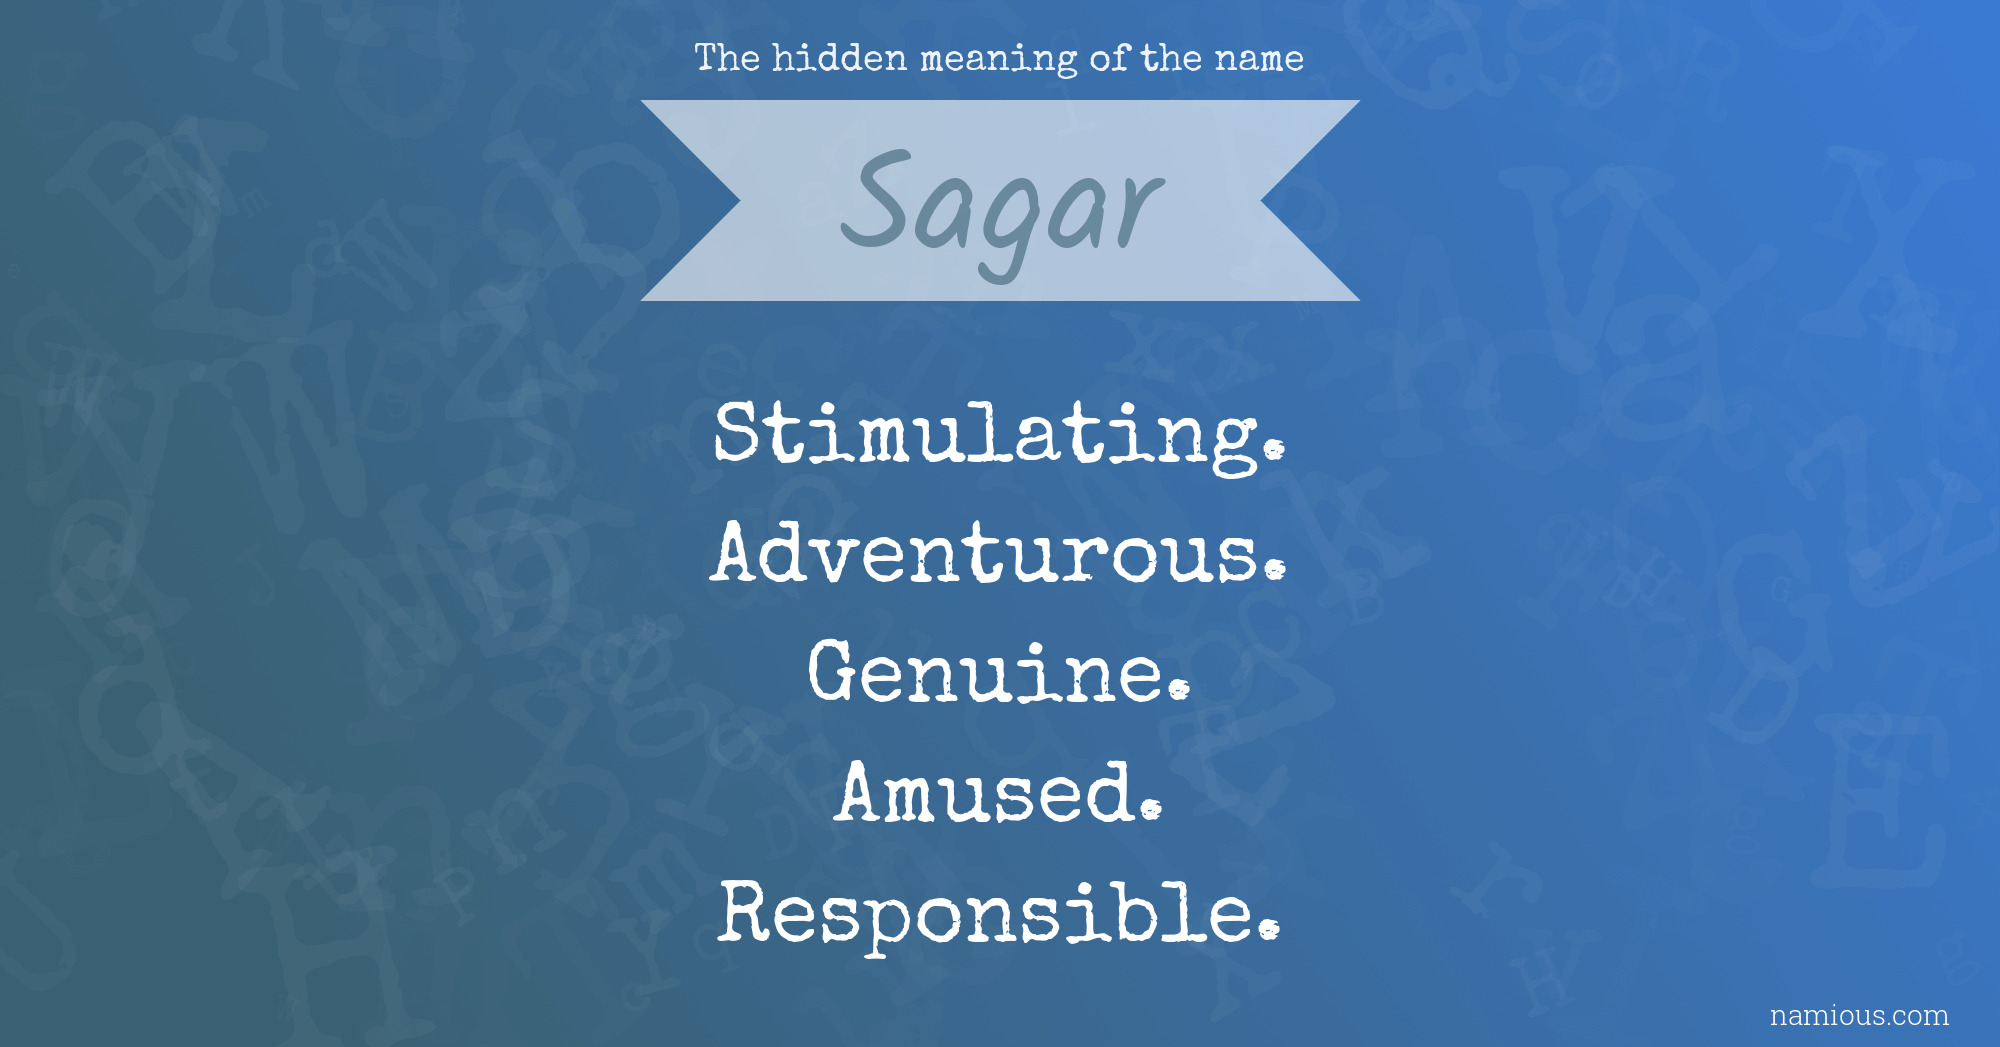 The hidden meaning of the name Sagar